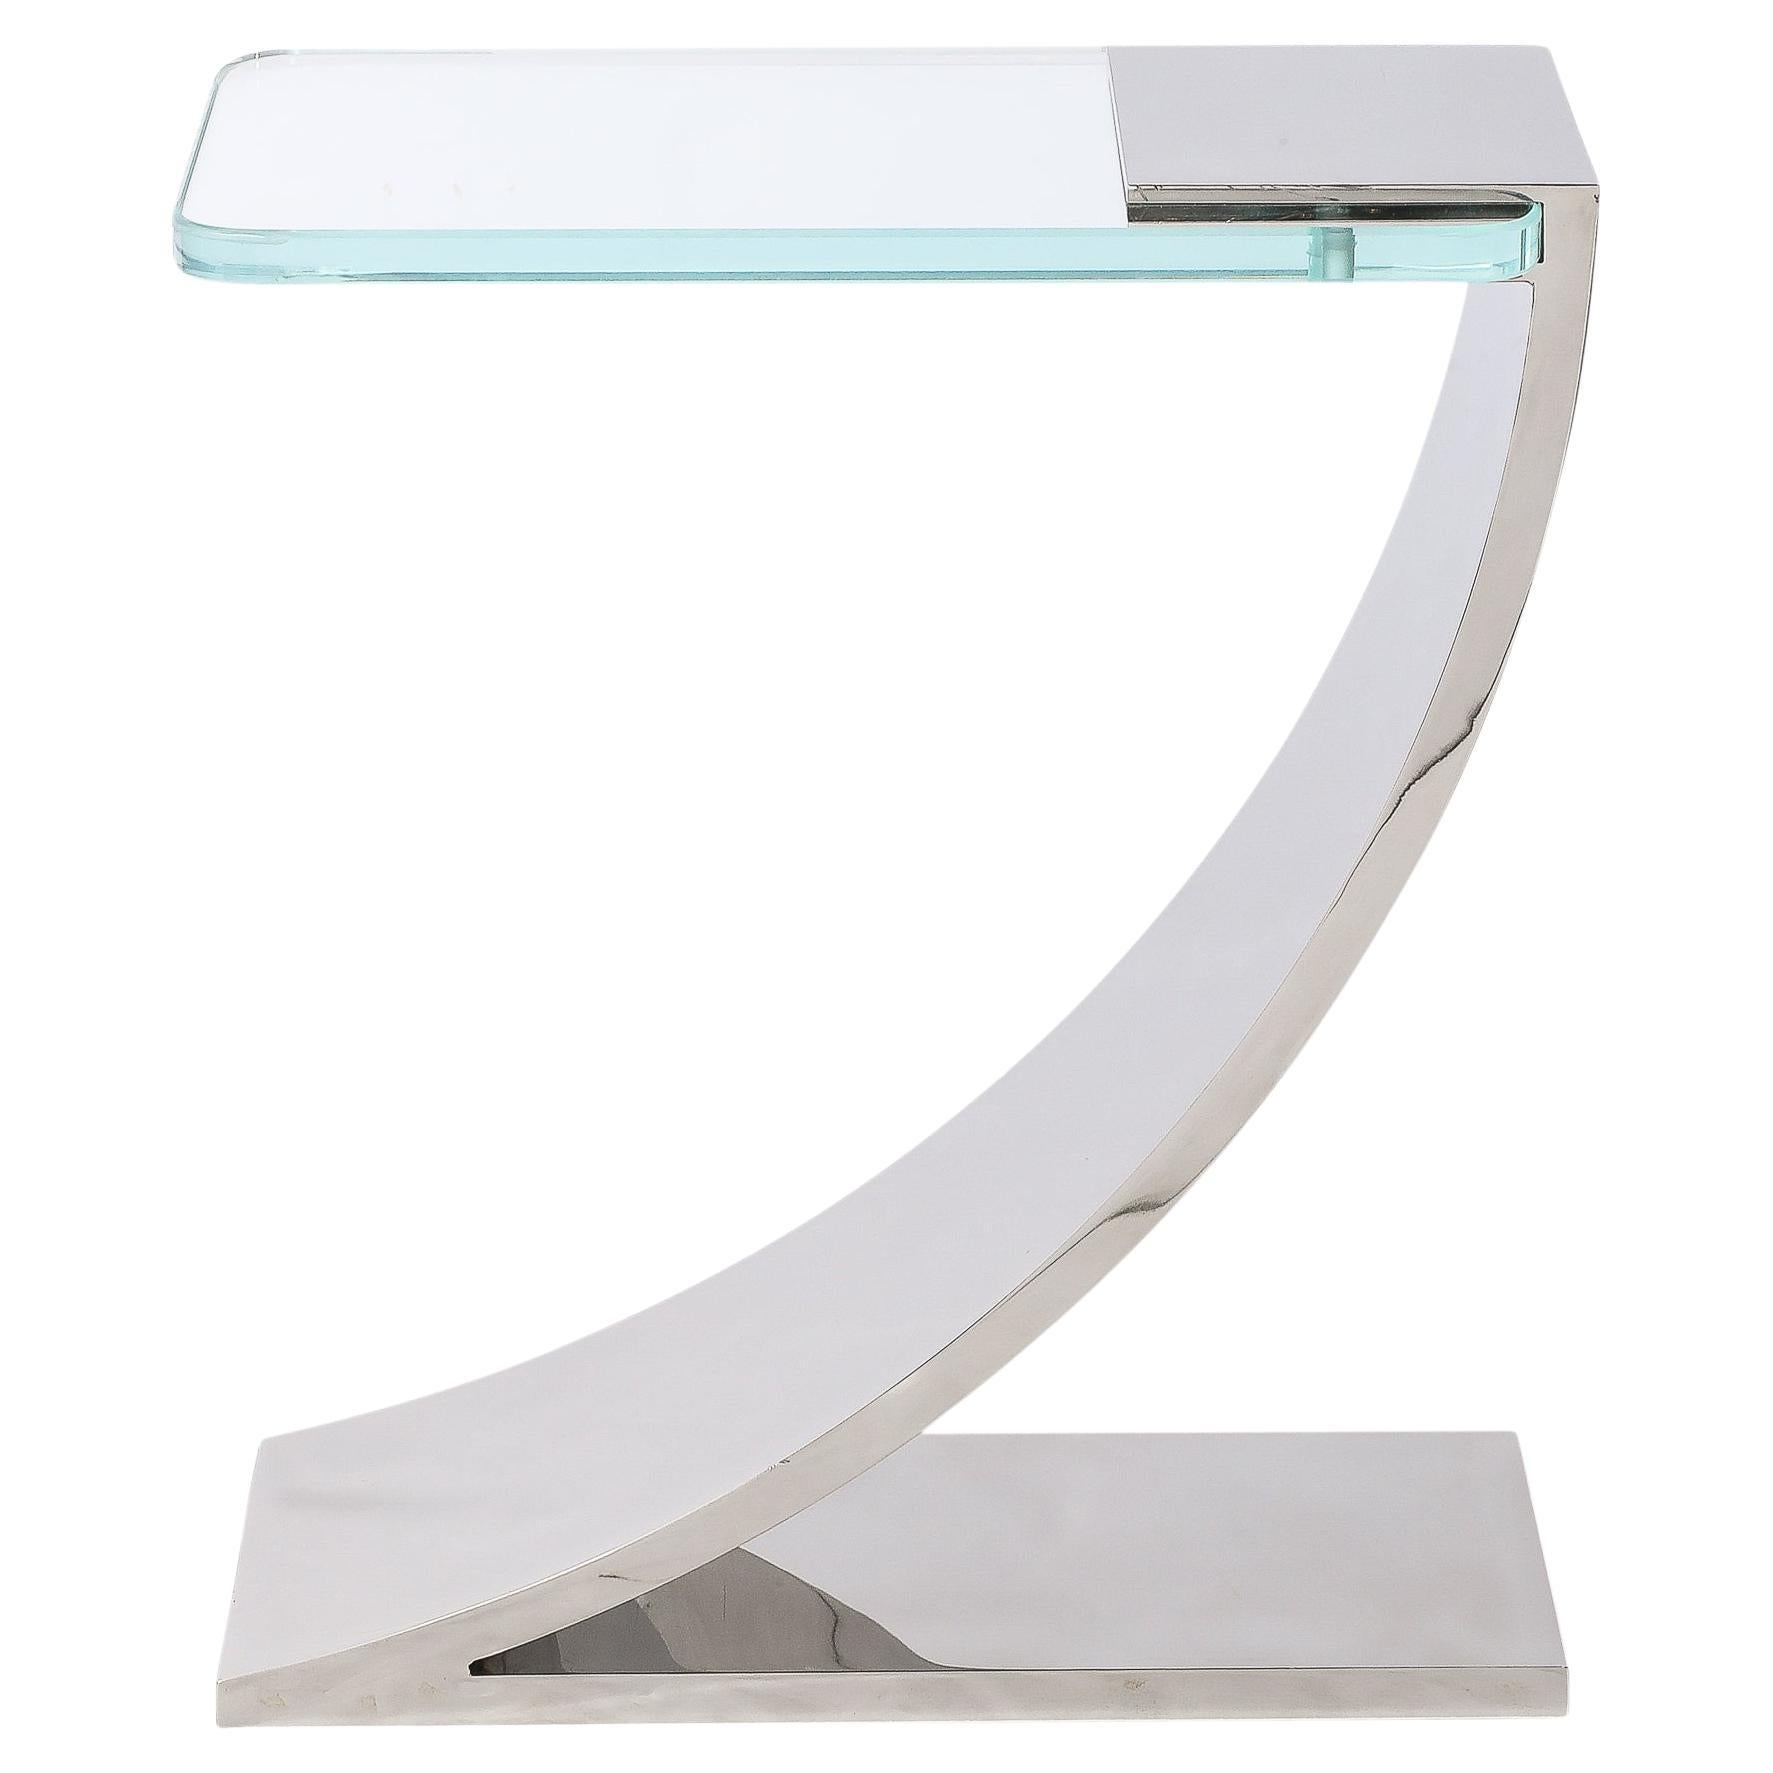 Table d'appoint en porte-à-faux sur mesure avec plateau en verre Starfire en nickel poli 